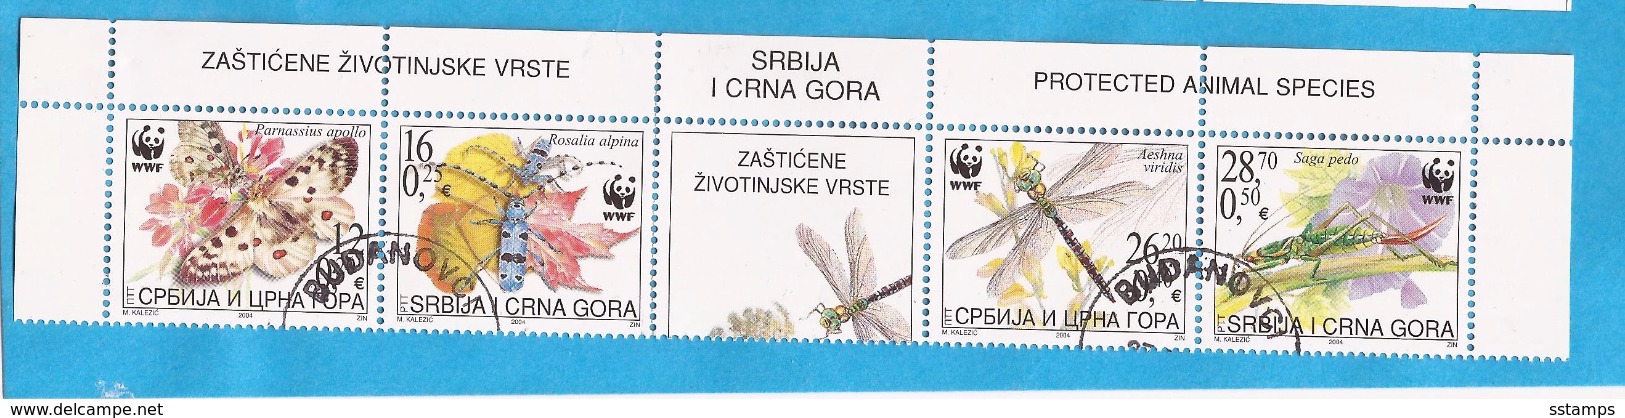 2004  317376  WWF INSETTI FARFALLE JUGOSLAVIJA JUGOSLAWIEN SRBIJA SERBIEN CRNA GORA MONTENEGRO USED - Used Stamps